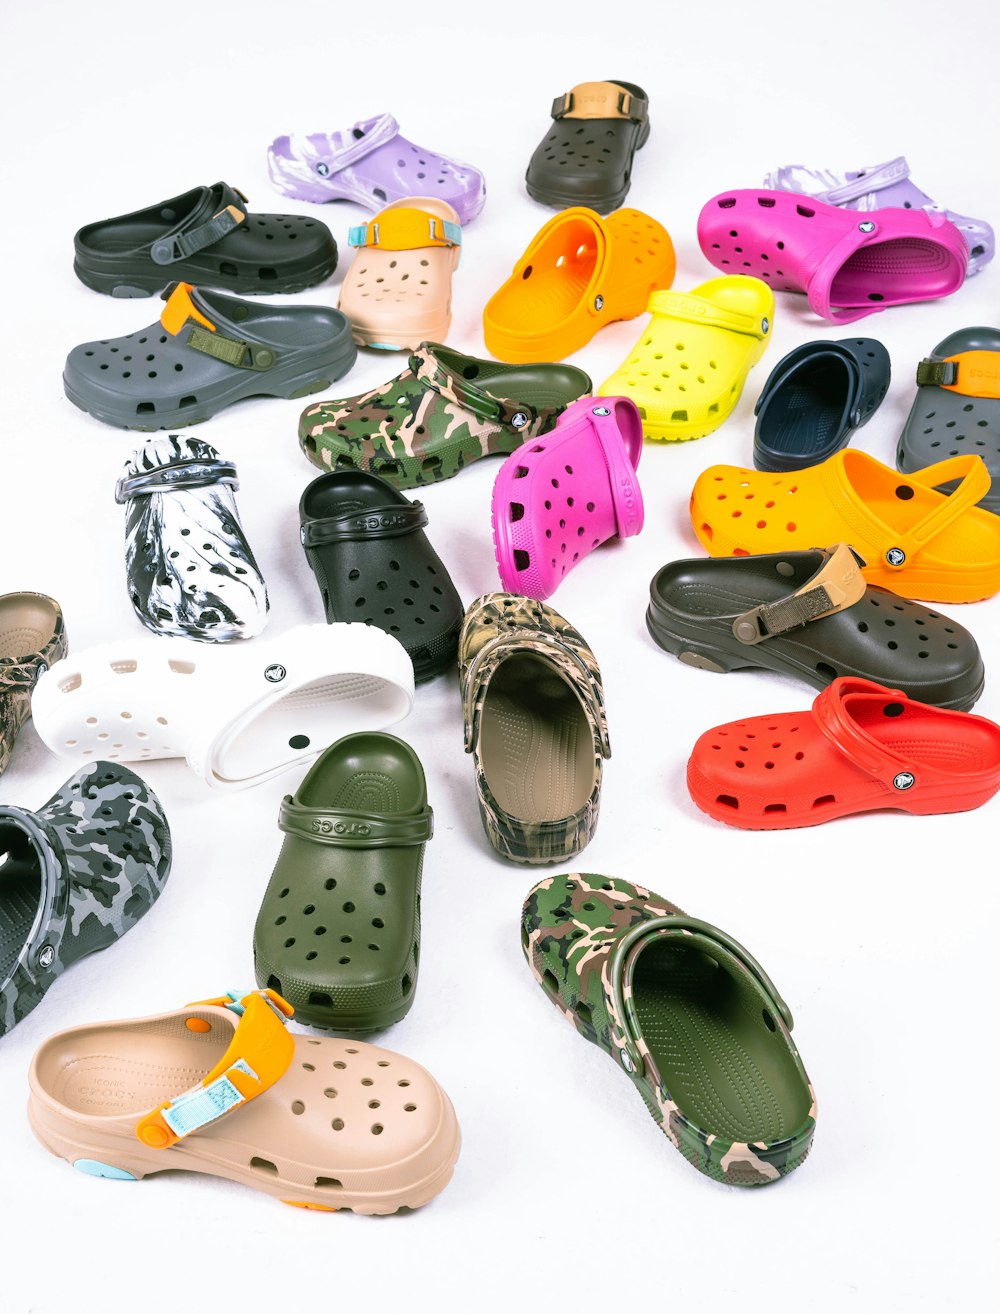 Crocs Shoes Pictures | Free Images on Unsplash